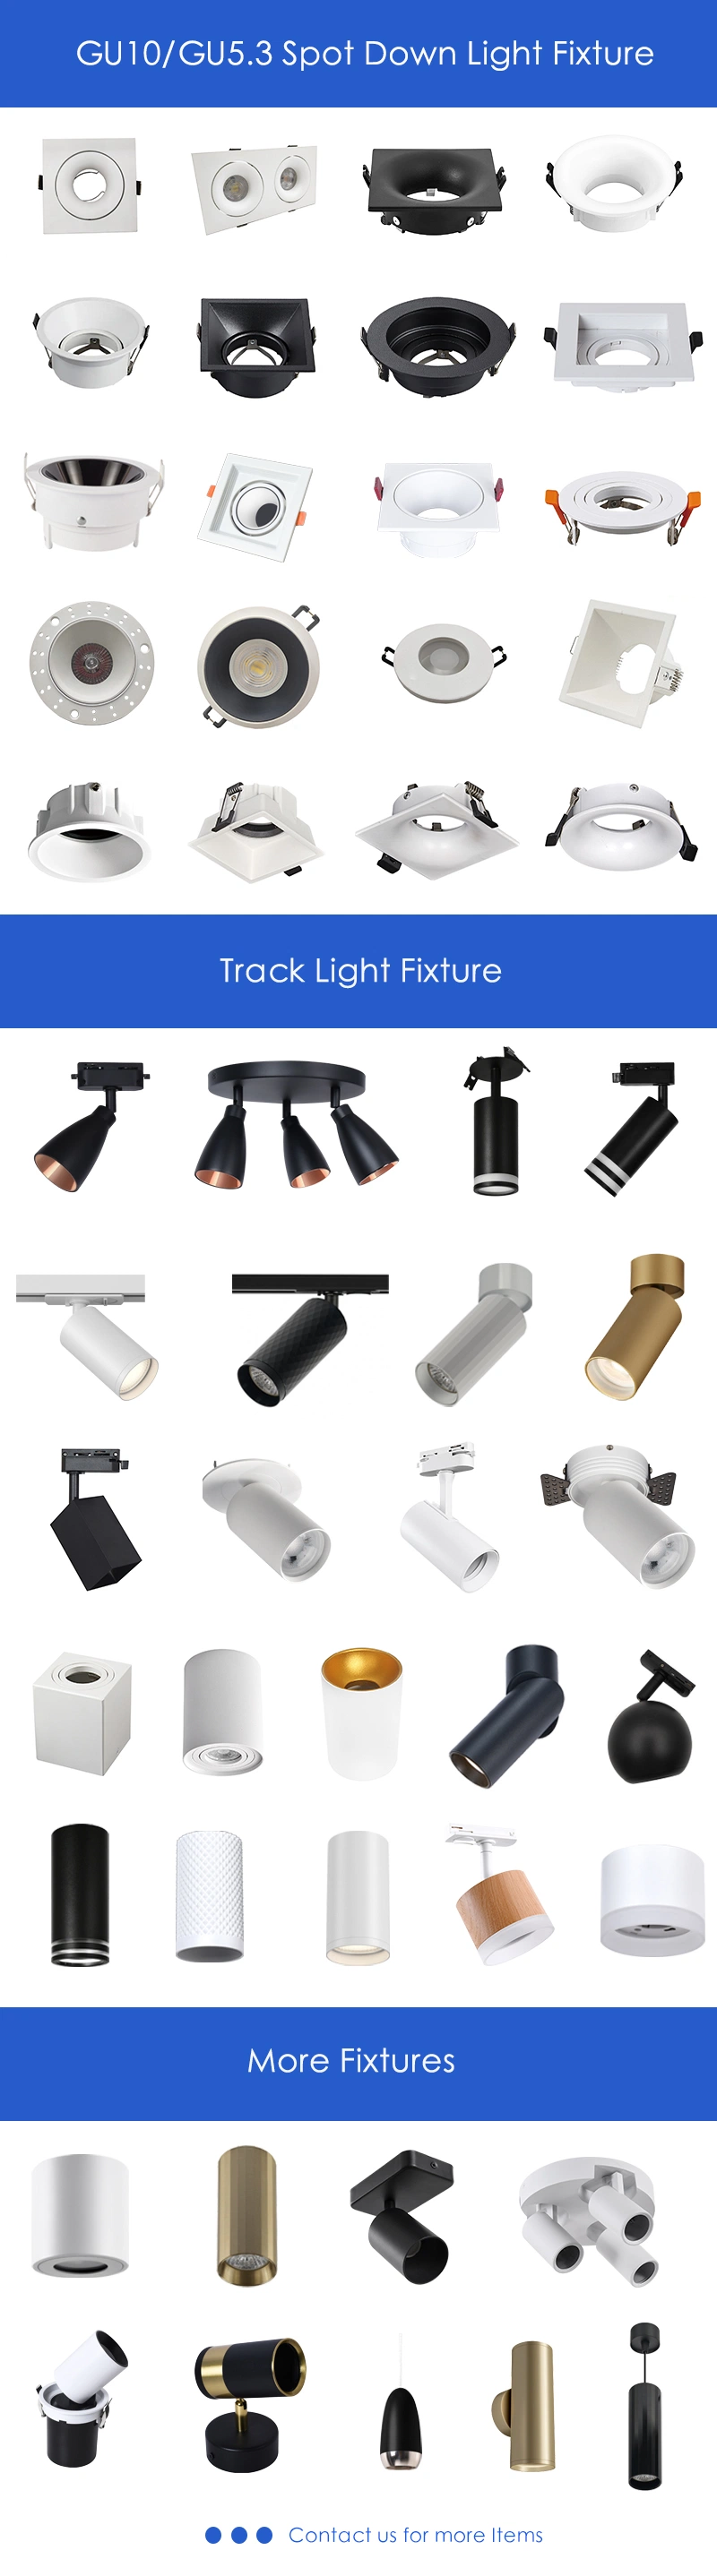 Decosun Aluminium Track Light Fixture with GU10 MR16 Commercial Track Light